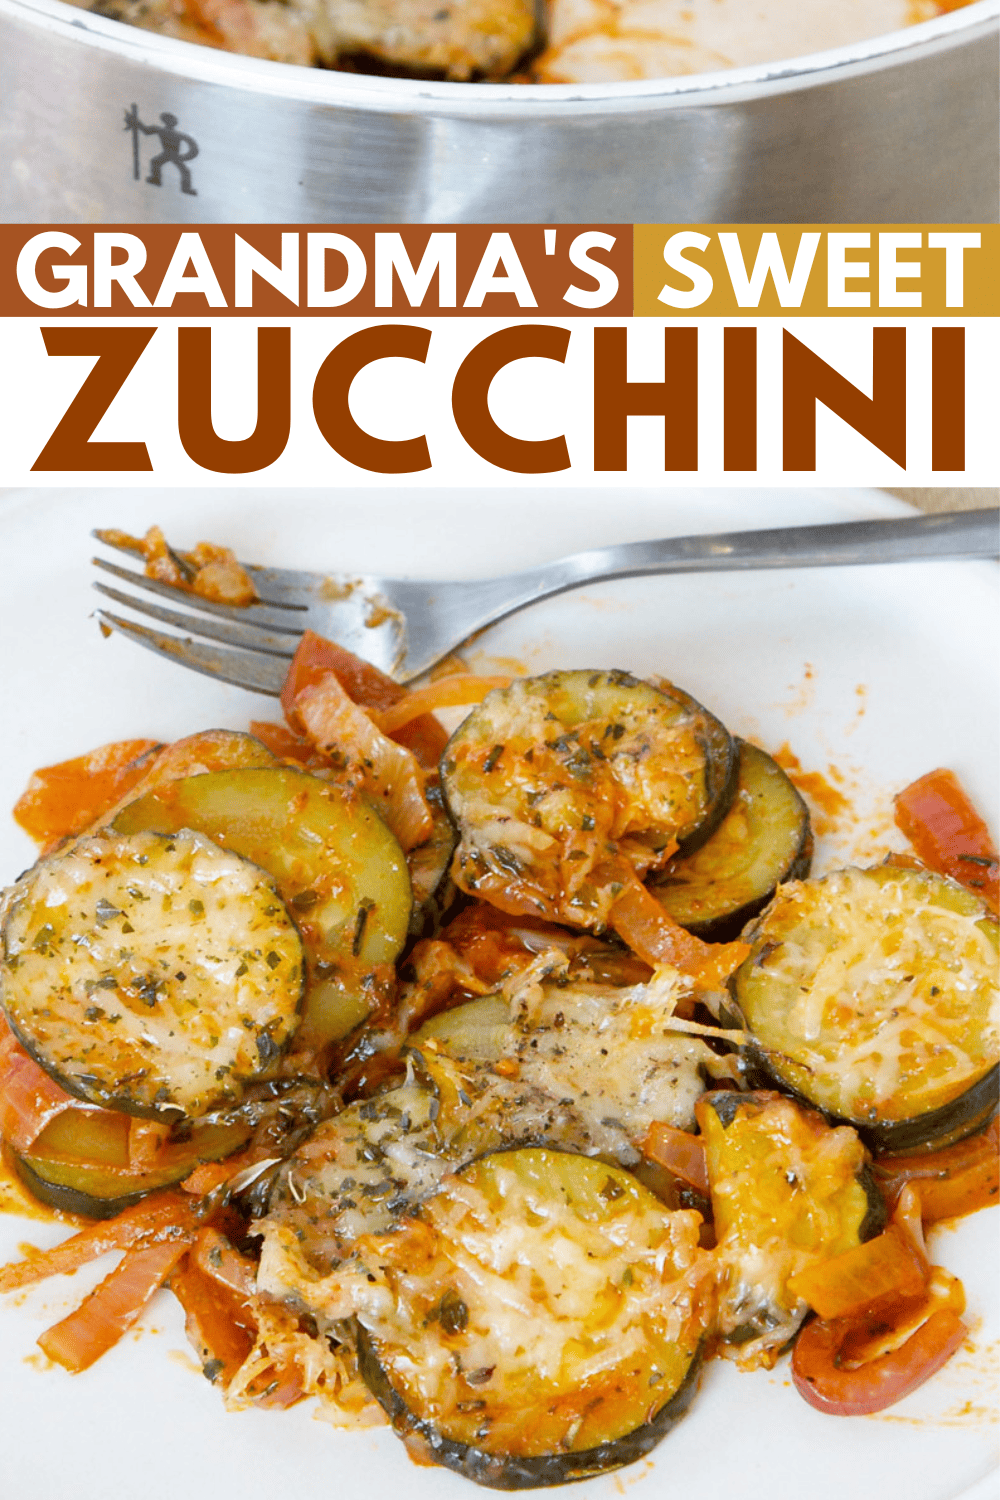 Grandma’s Sweet Zucchini with Parmesan